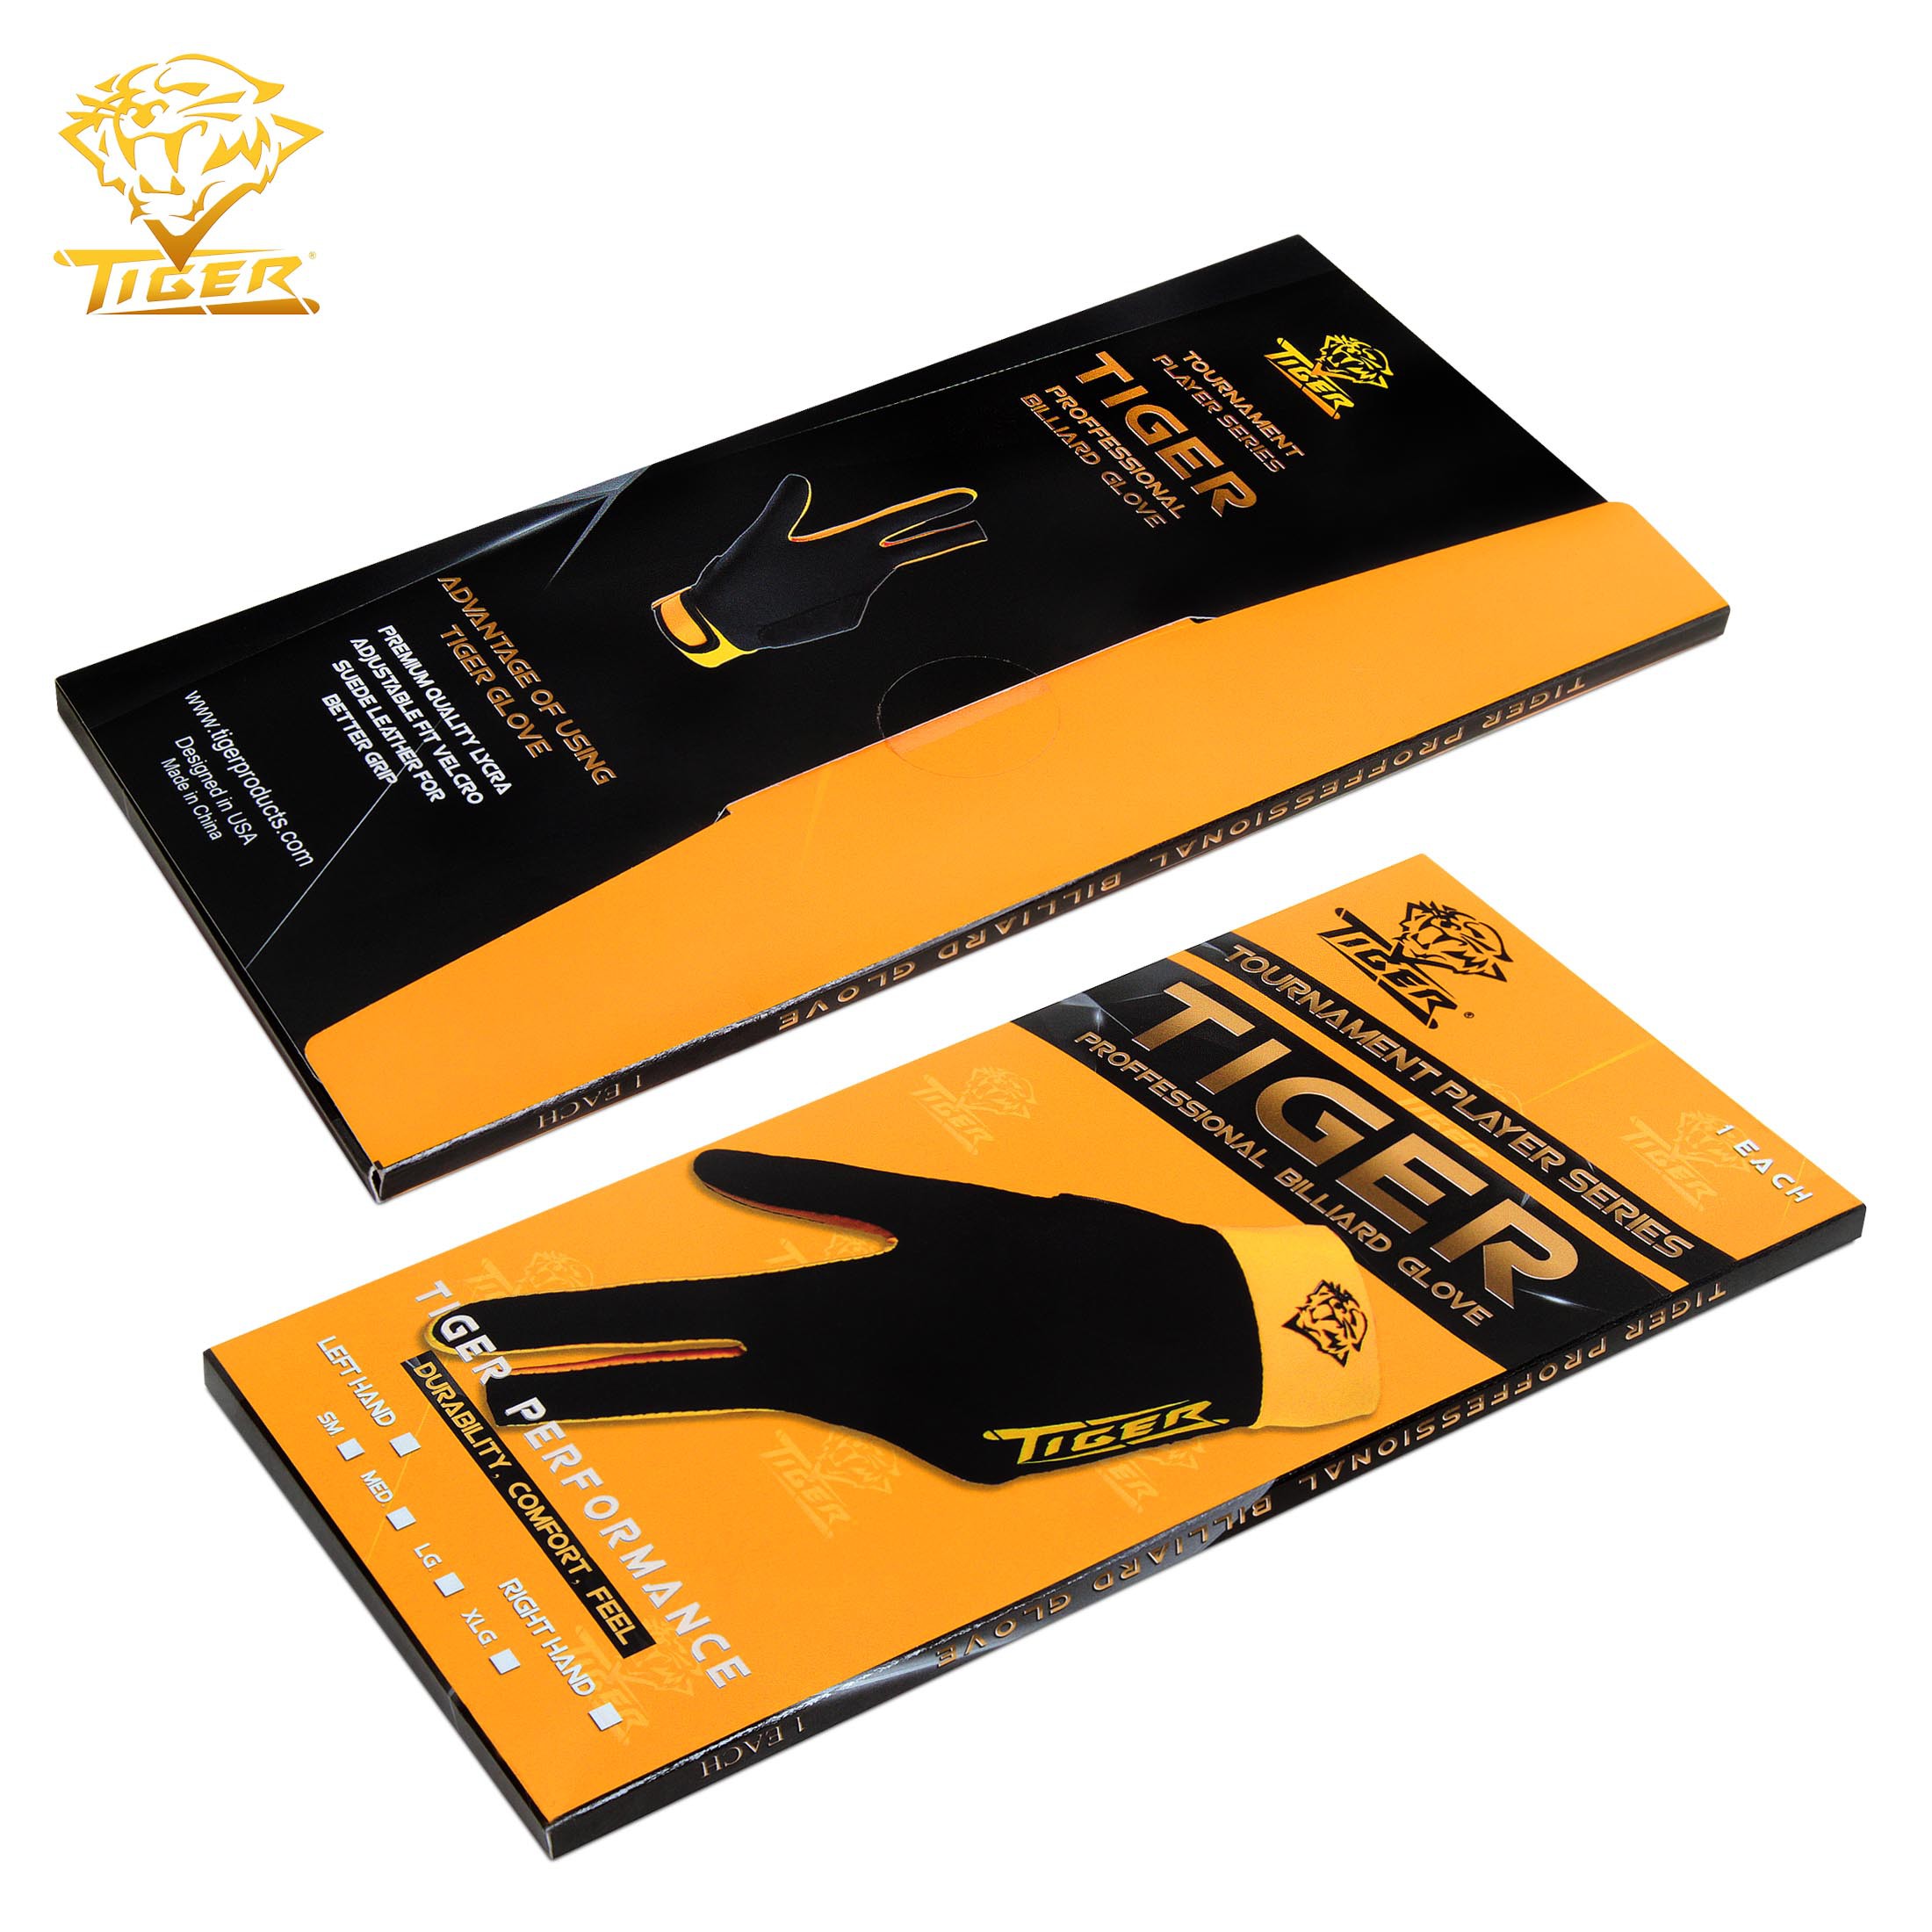 Перчатка Tiger Professional Billiard Glove правая L (для левши)